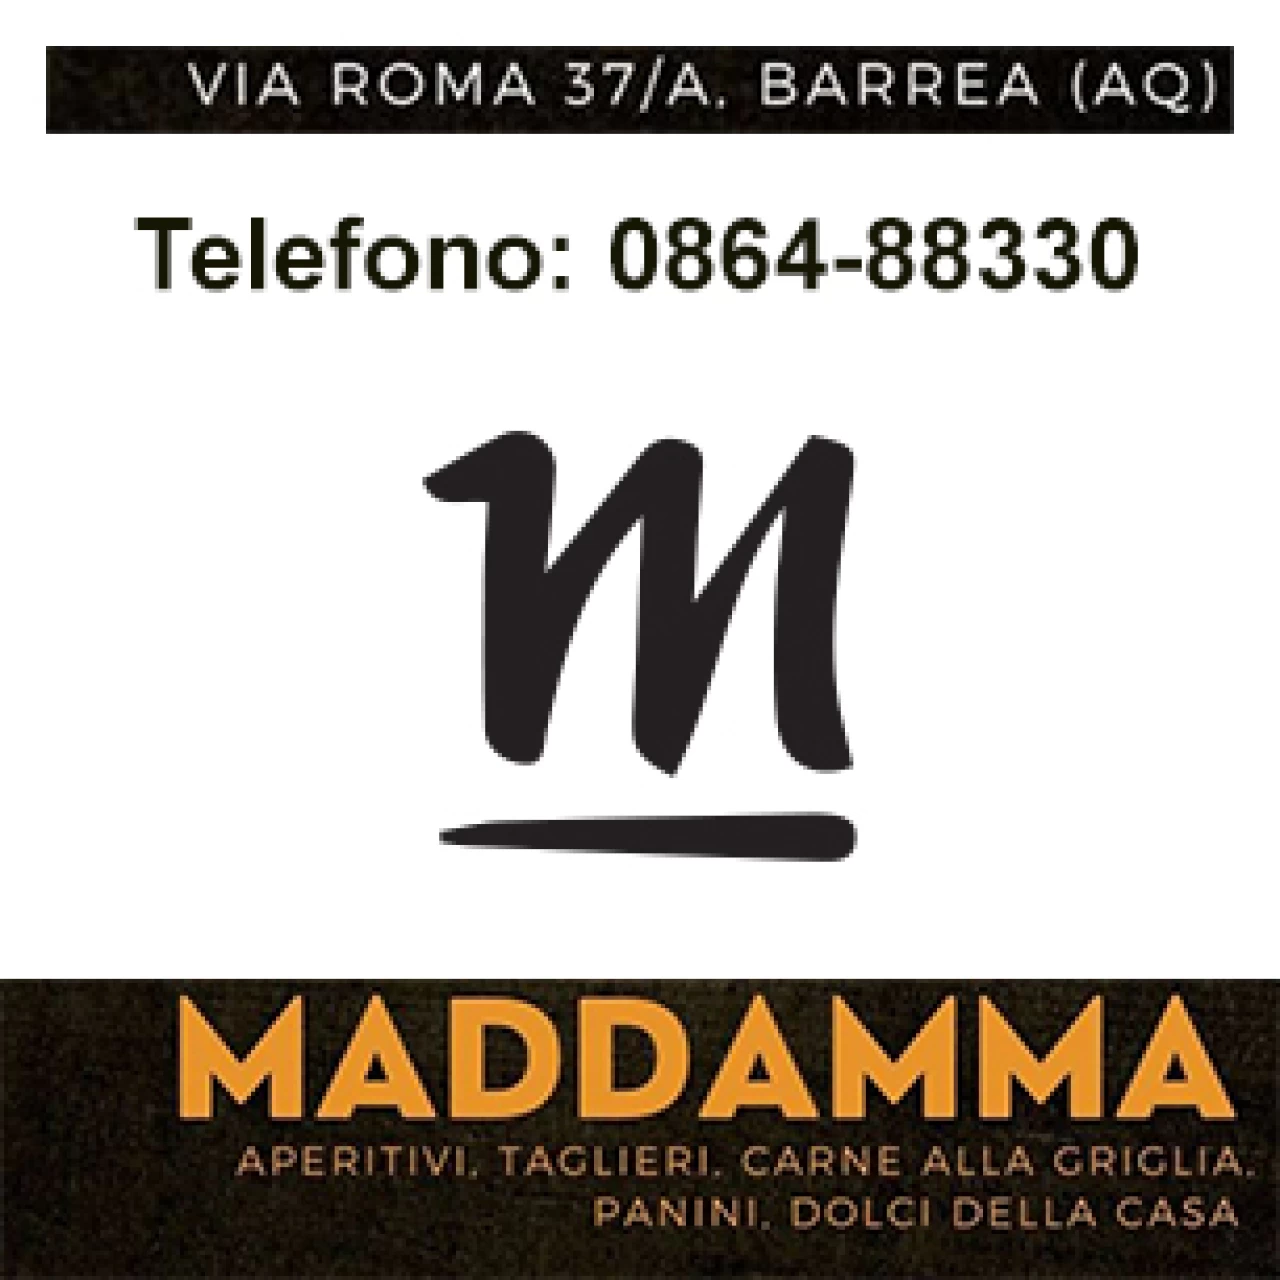 Banner Maddamma 306 per 306 pixel